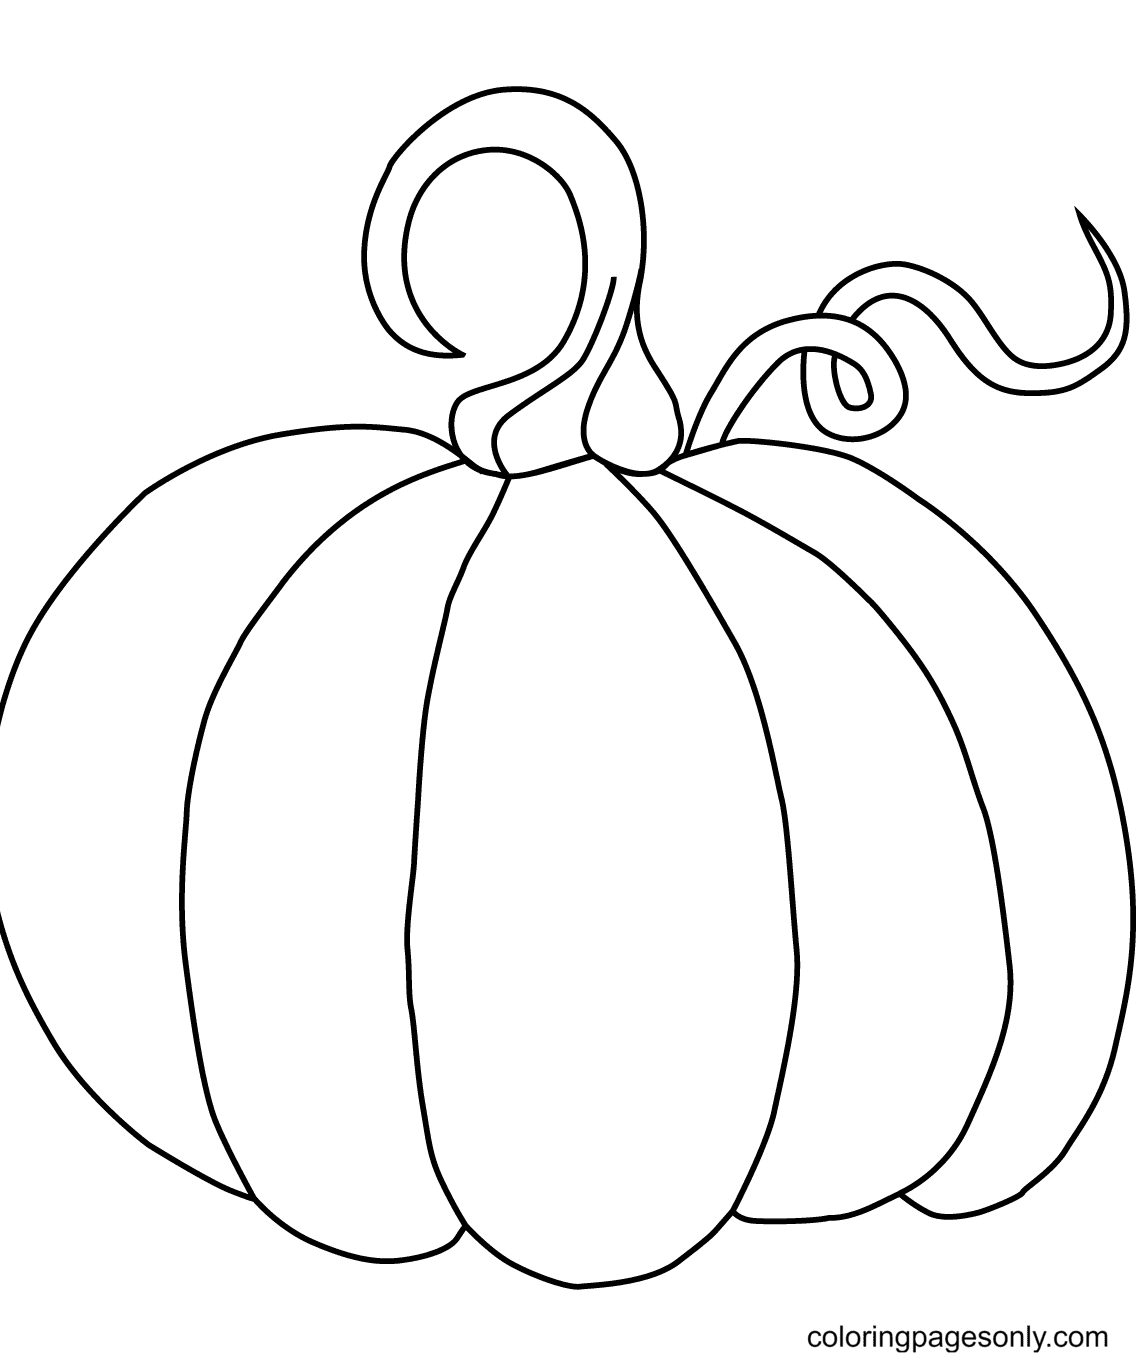 A Pumpkin Coloring Page